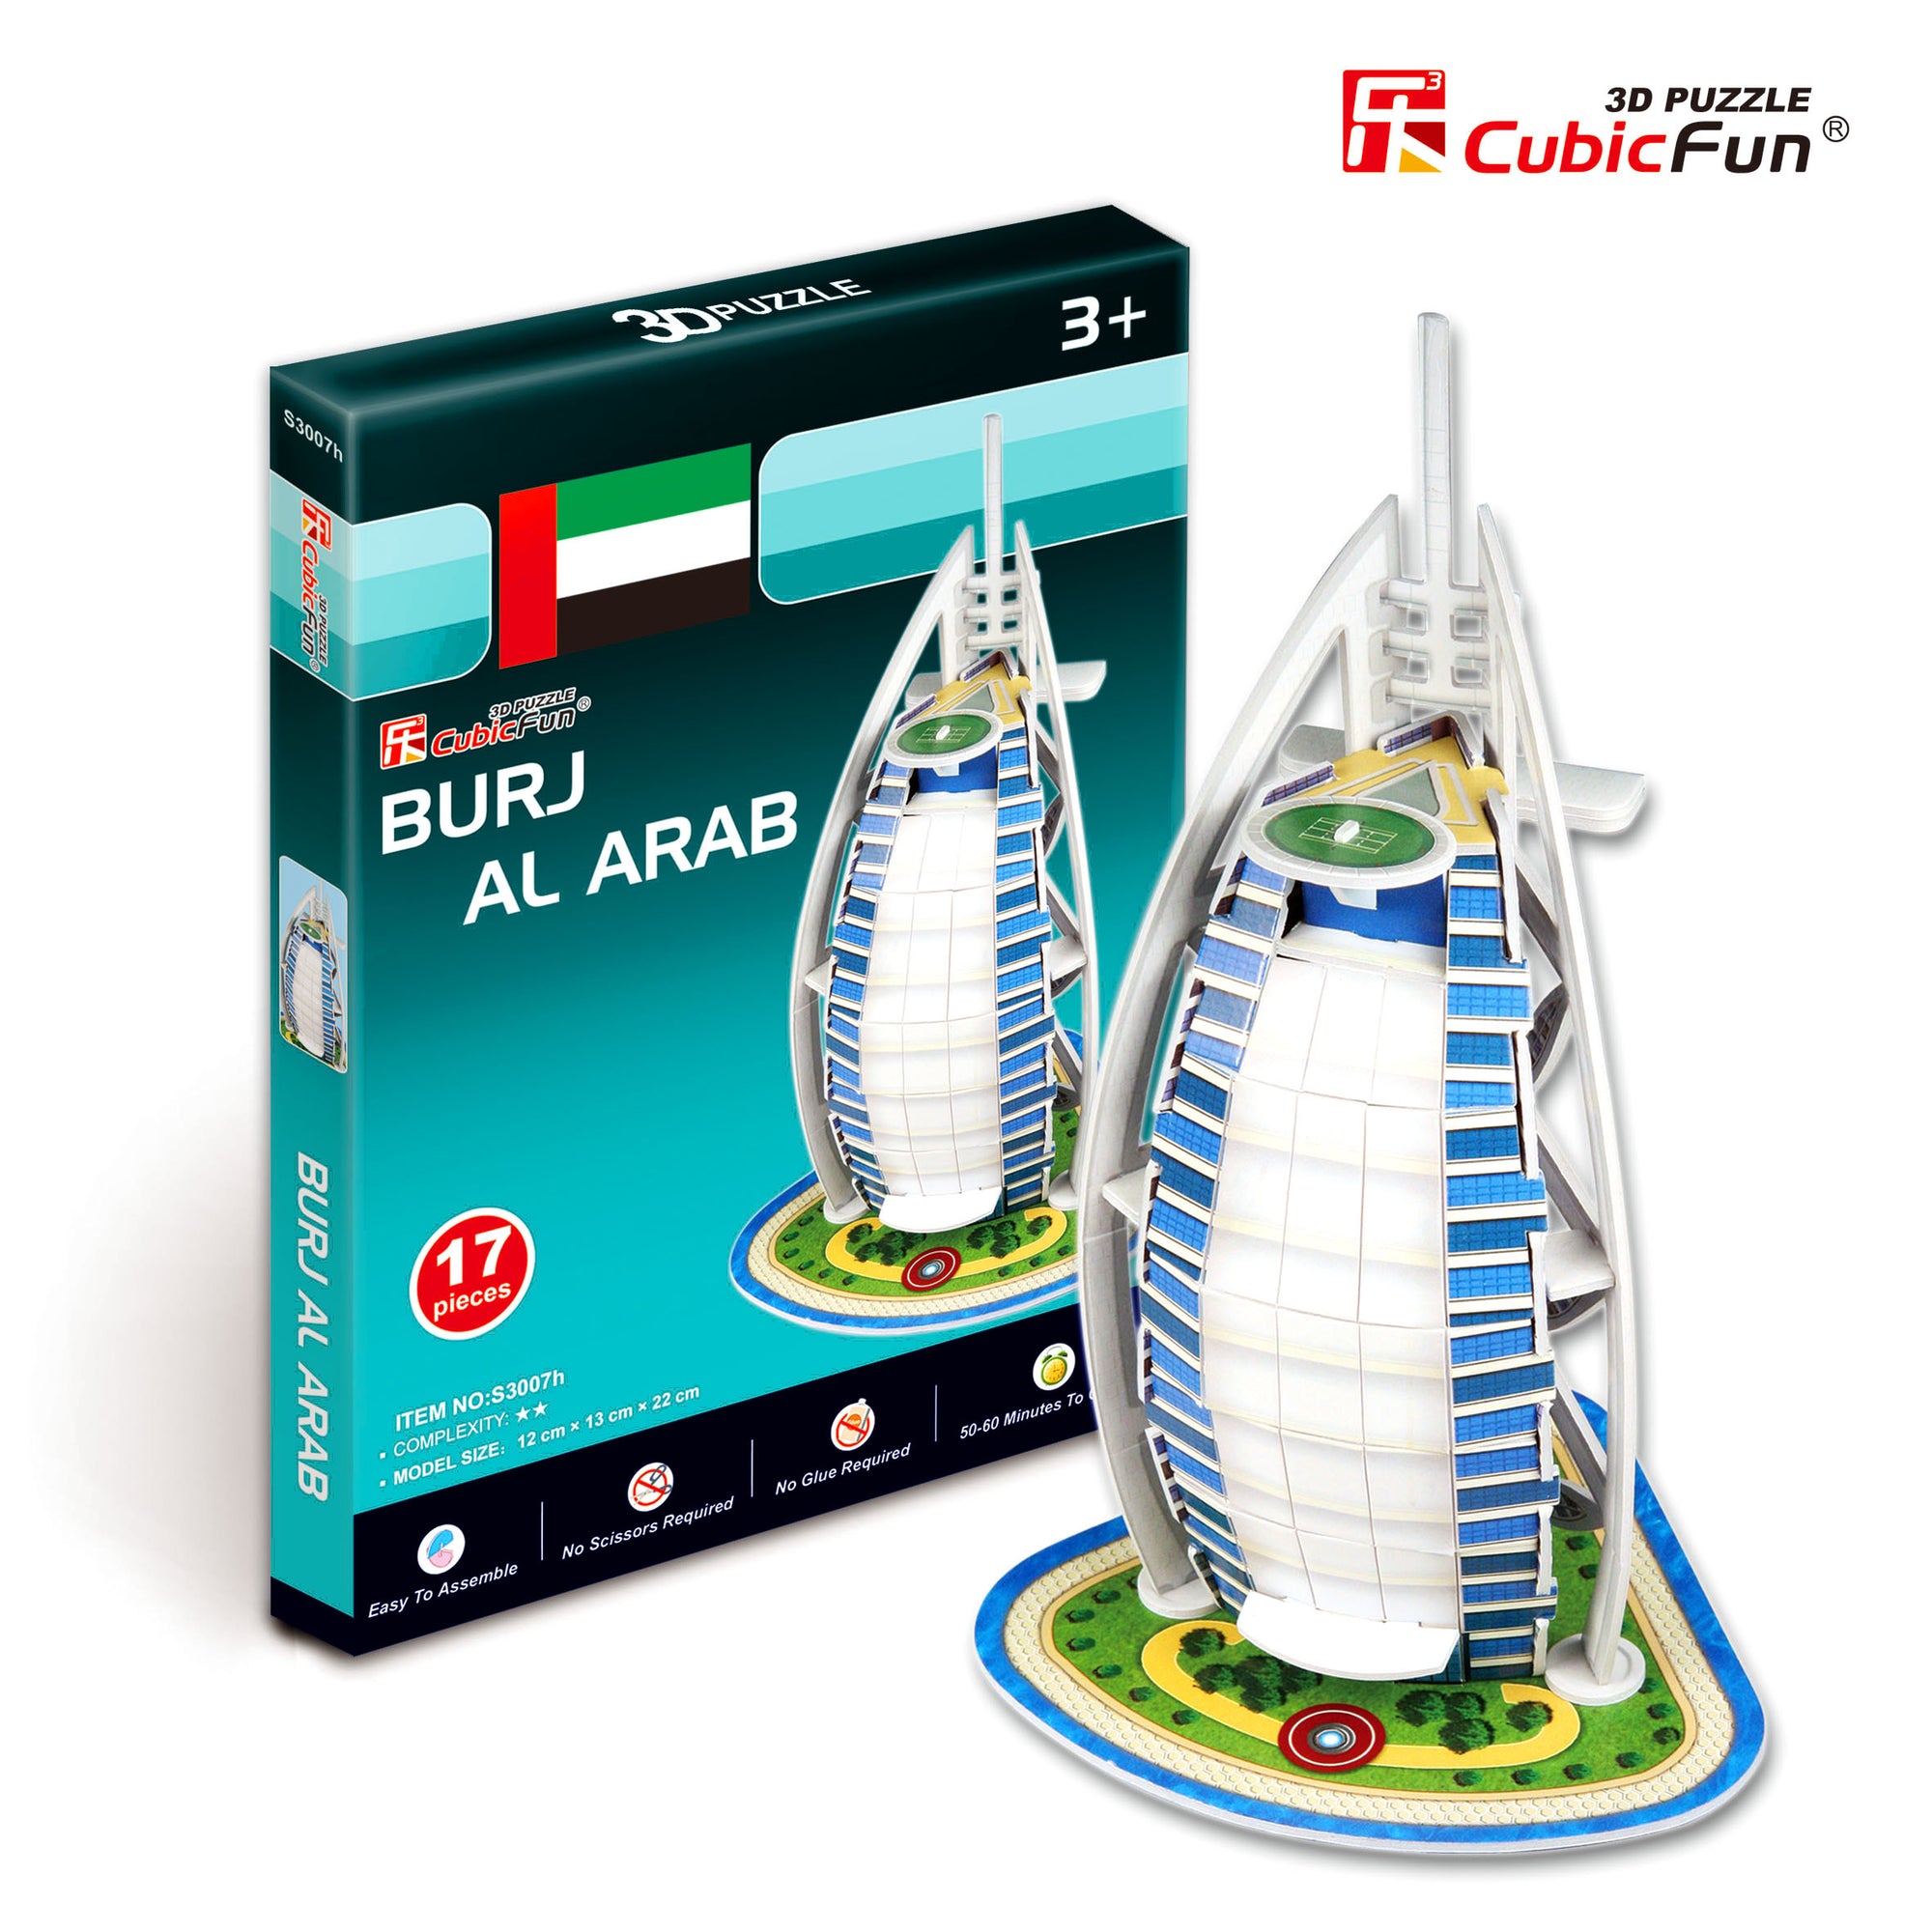 Burj Al Arab, 17pc 3D Puzzle